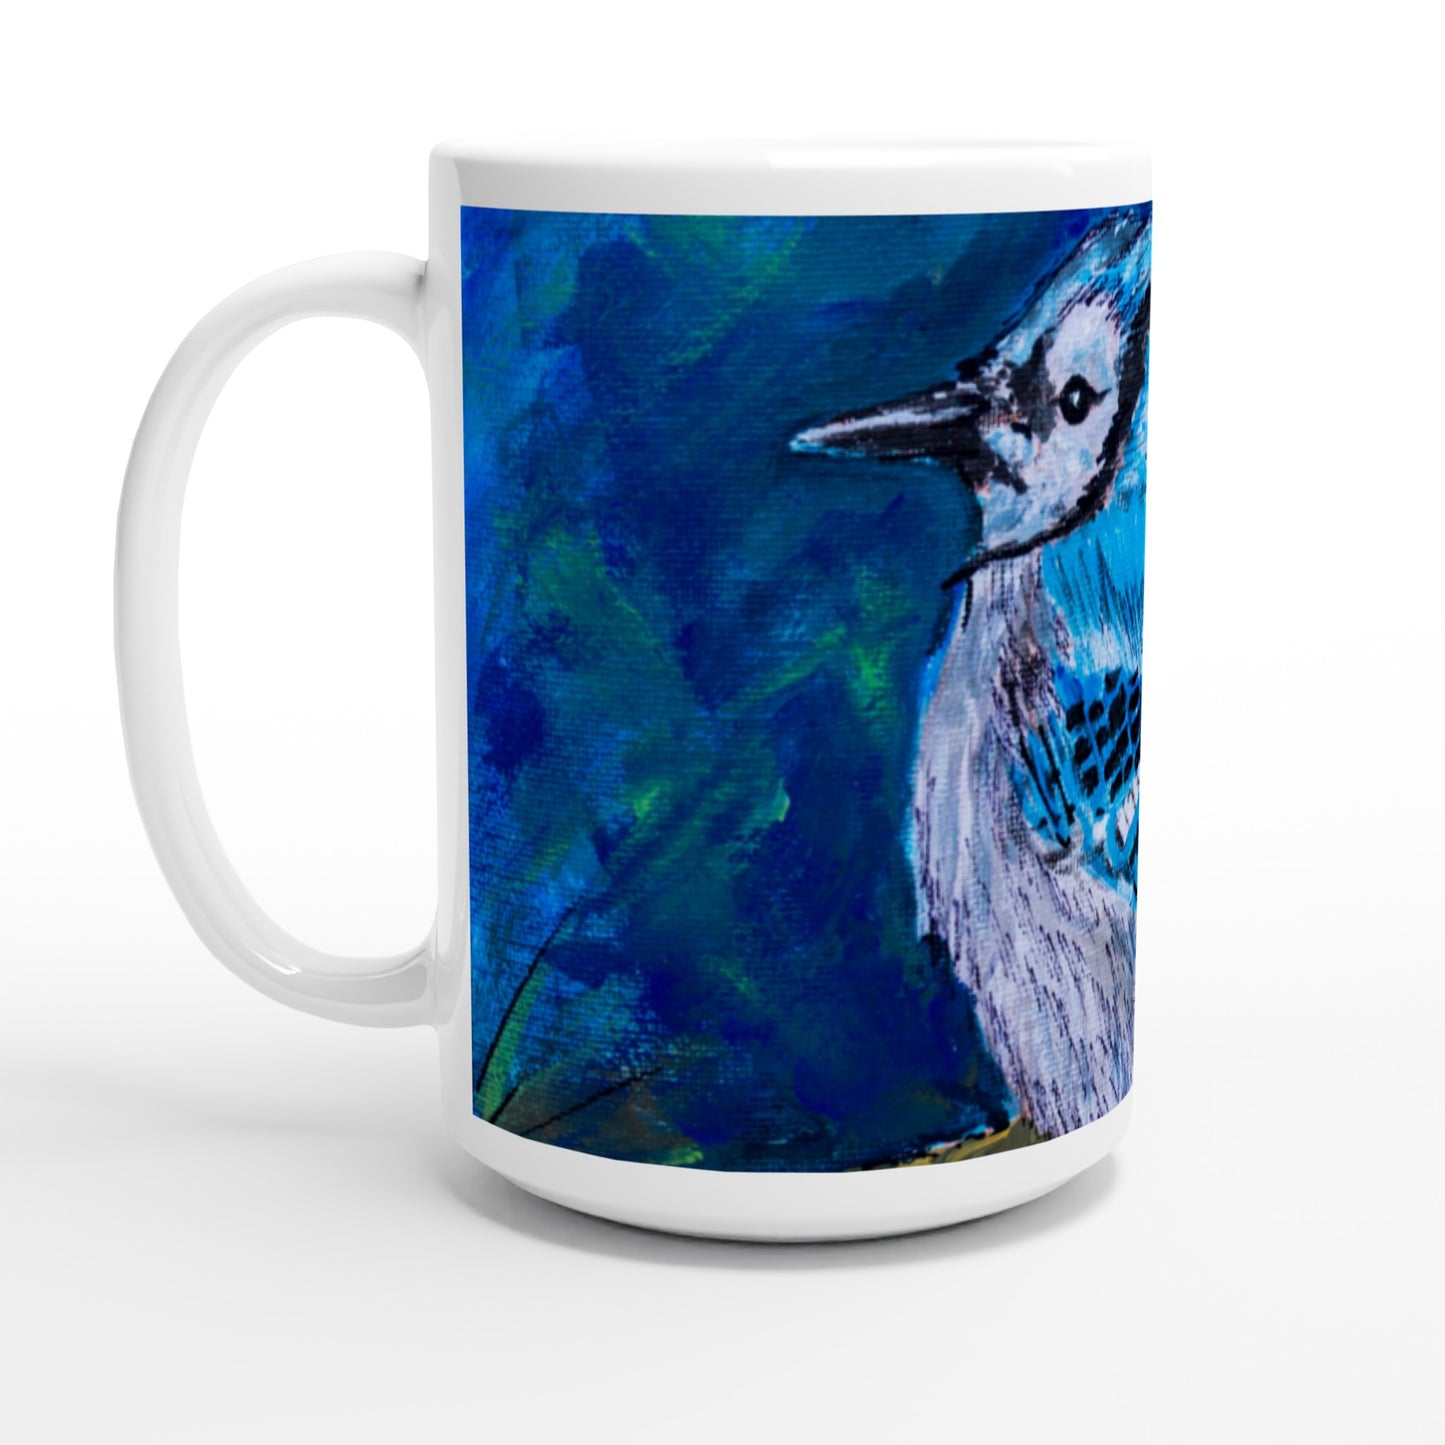 Blue Jay #1 - Mugs